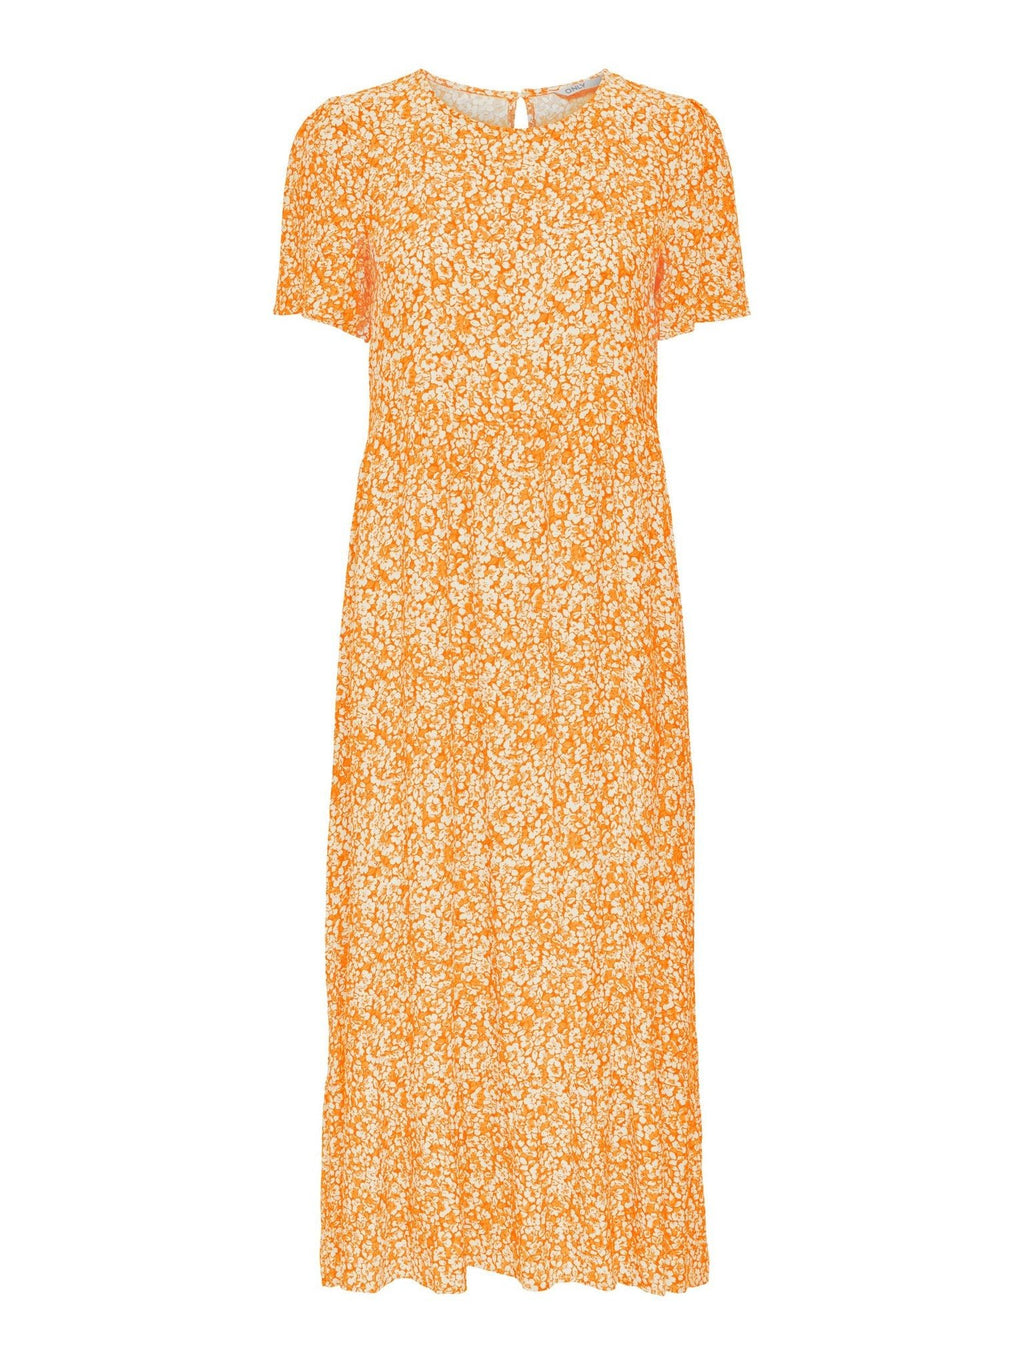 Robe Midi Malle - orange floral